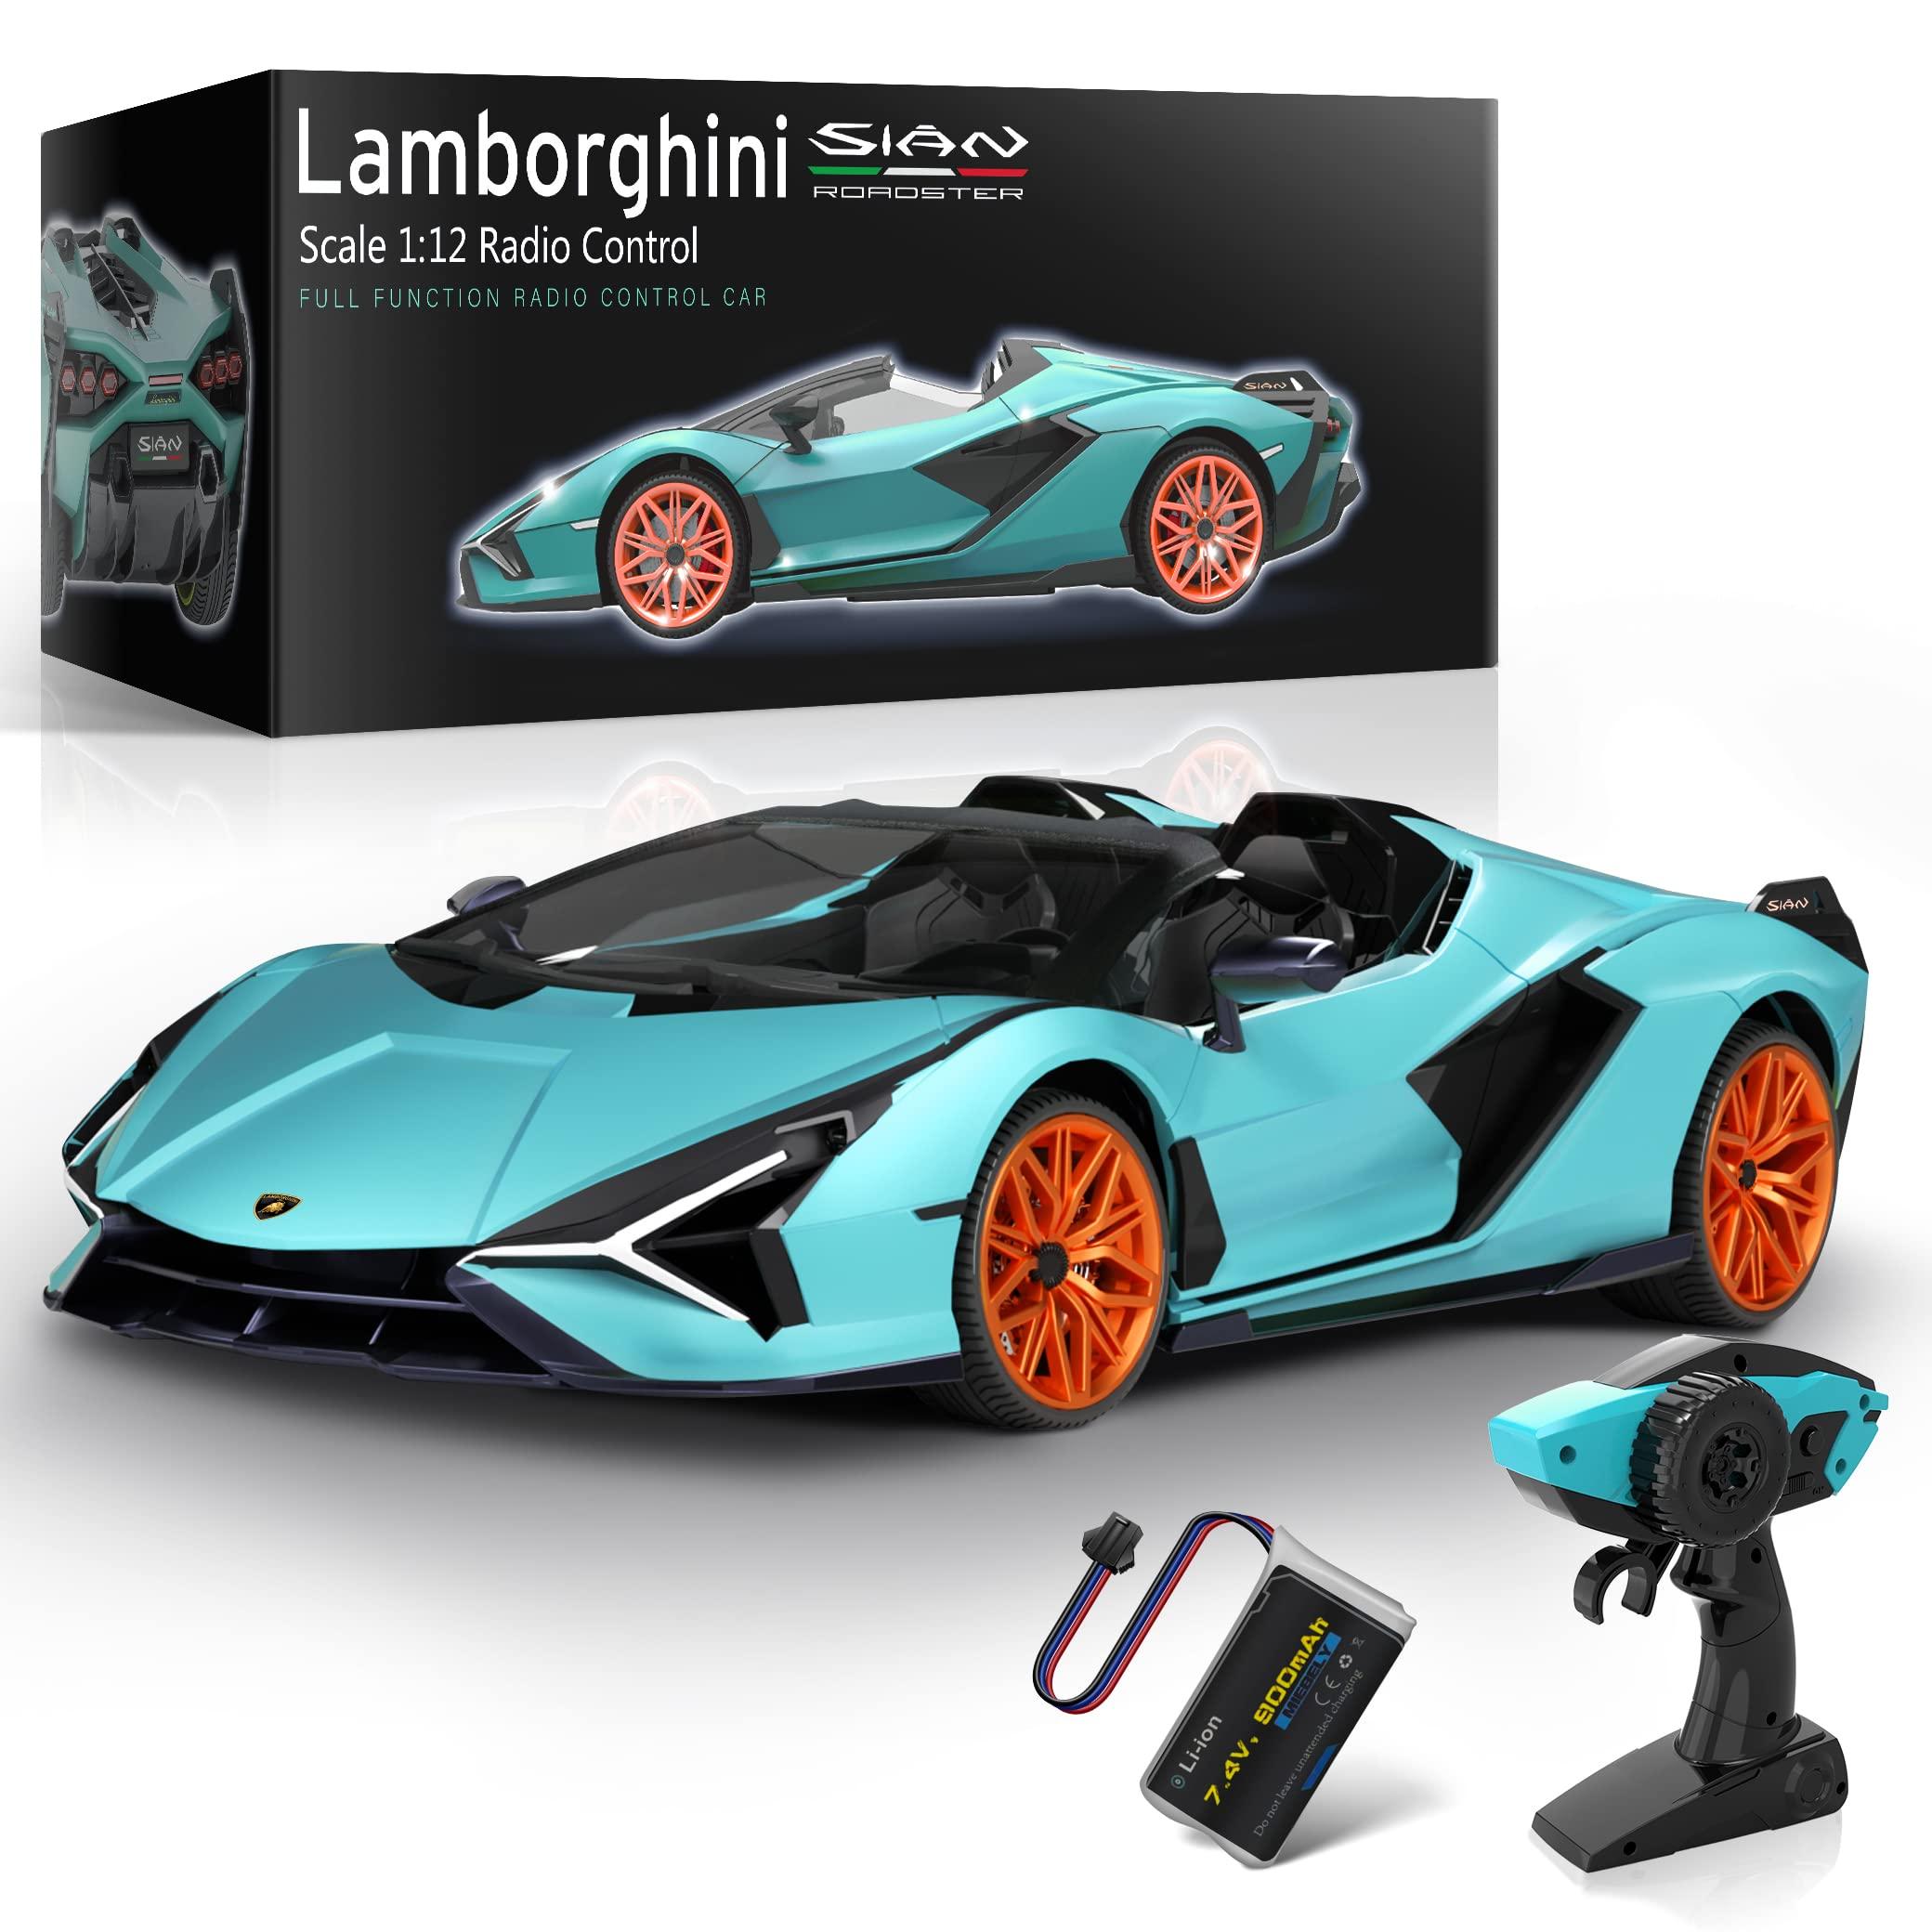 Lamborghini Toy Remote Control: Lamborghini Toy RC: Fast, Agile Controls with Realistic Features.